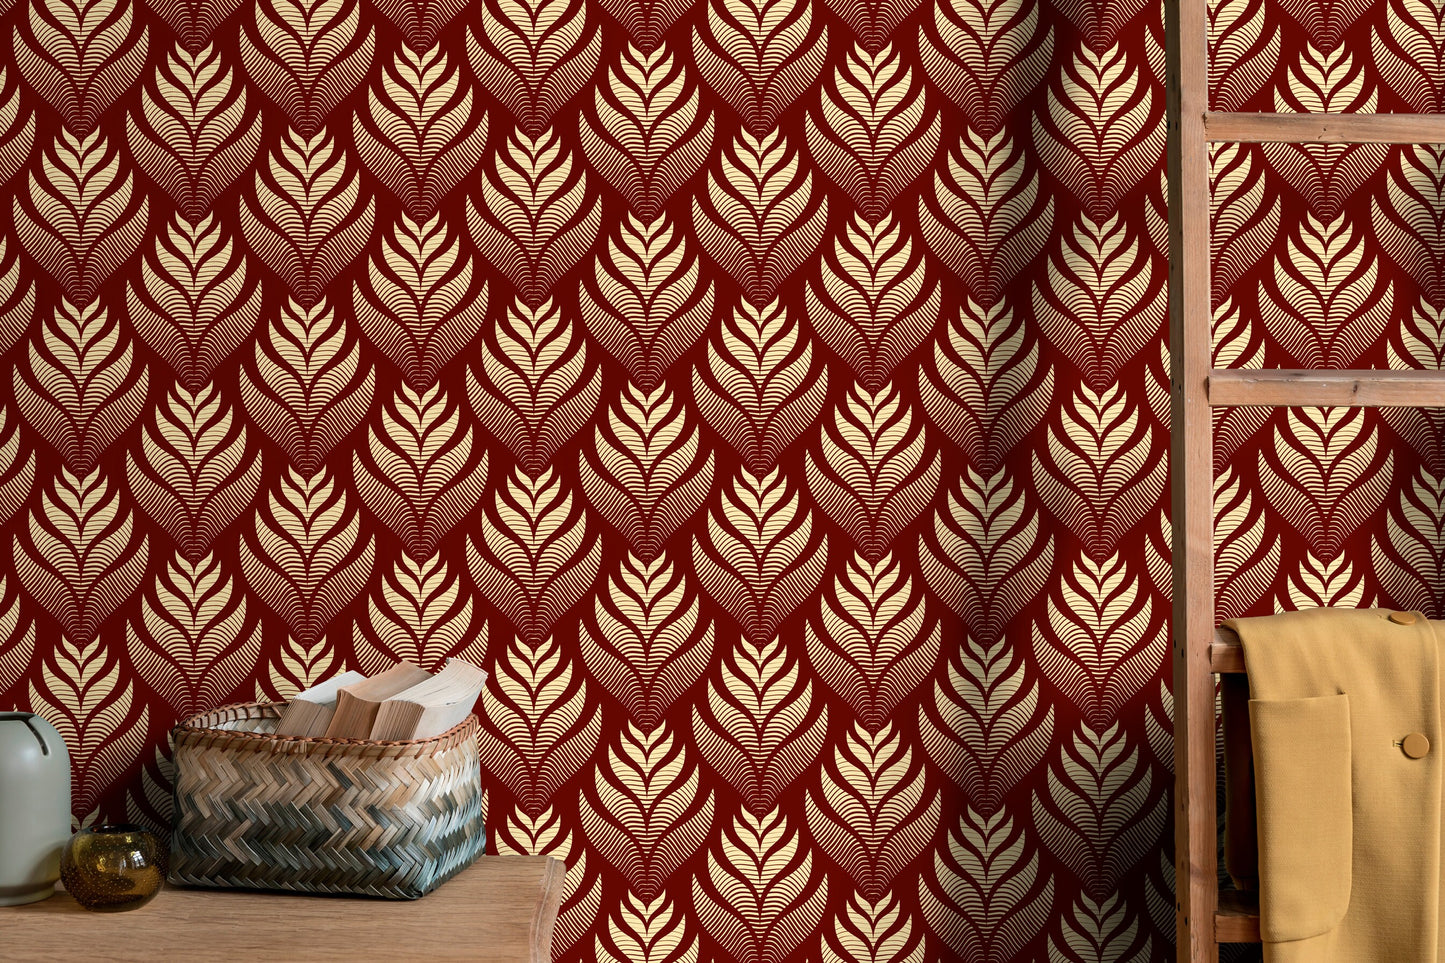 Wallpaper Peel and Stick Wallpaper Removable Wallpaper Home Decor Wall Art Wall Decor Room Decor / Non-Metalic Leaf Wallpaper - C493